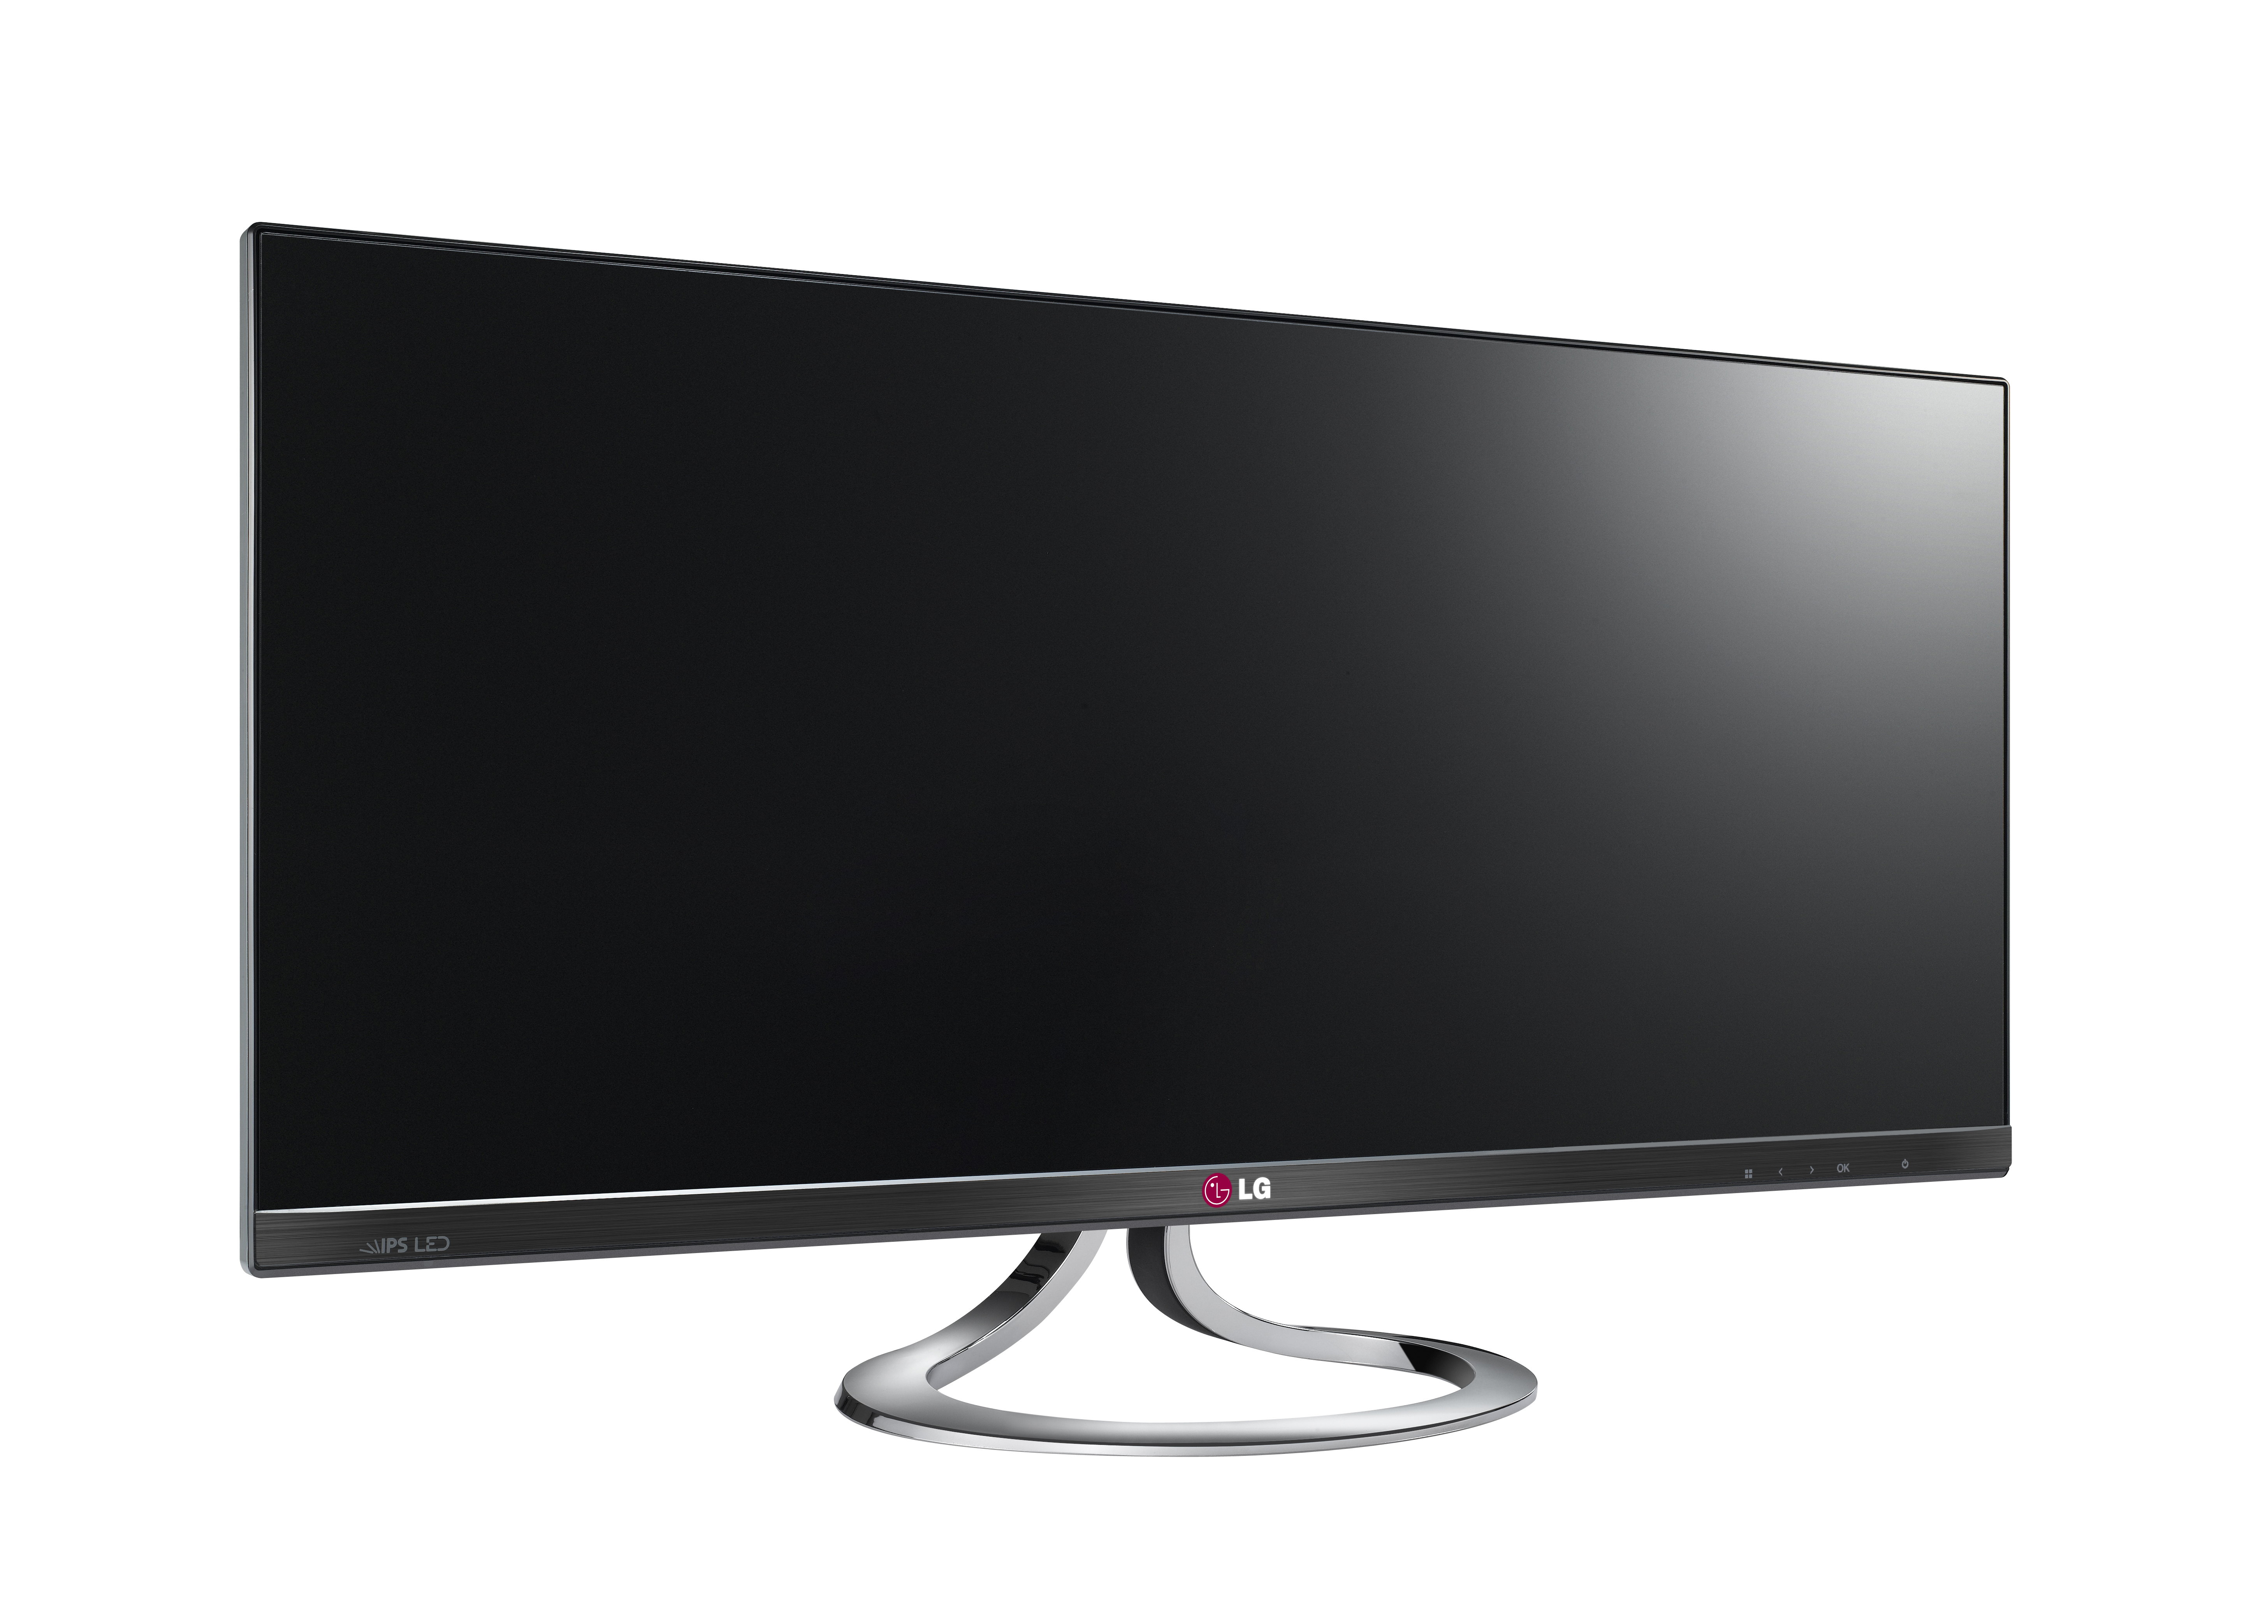 A left-side view of LG UltraWide monitor model EA93